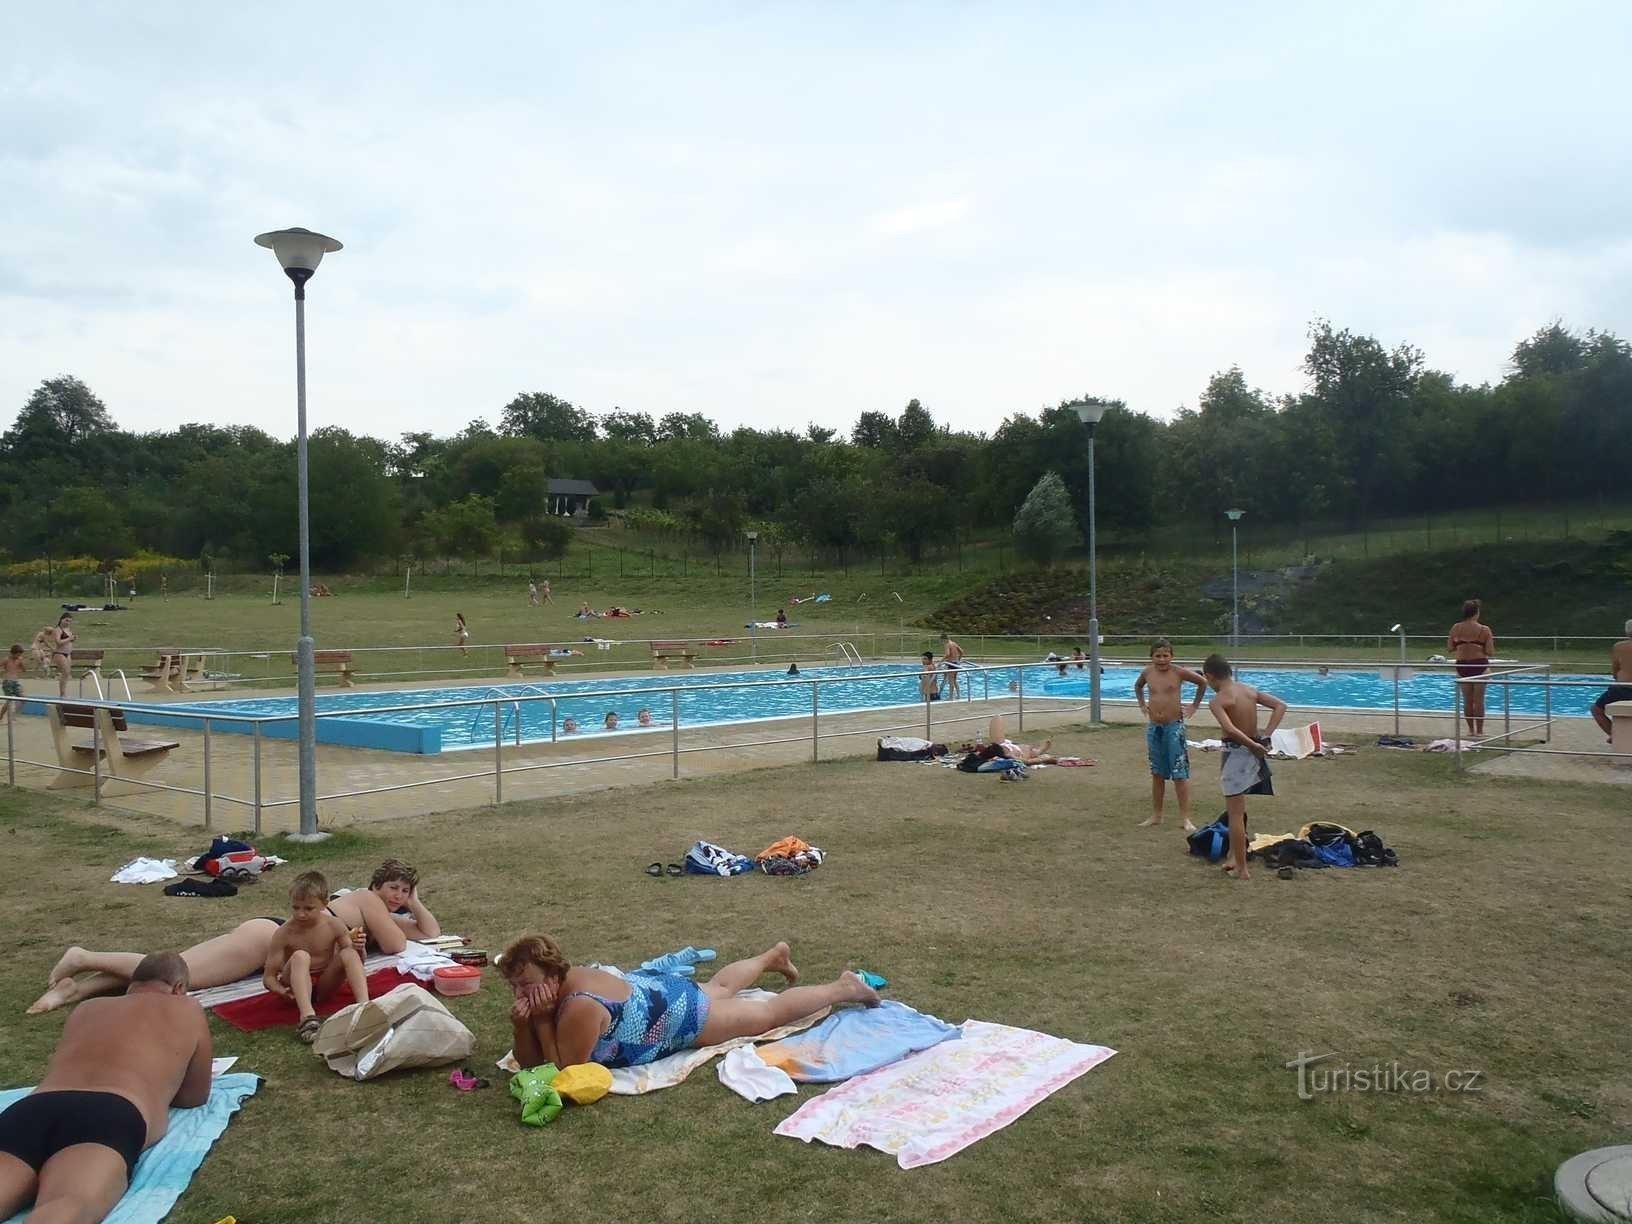 Swimming pool (25m) - 21.8.2012